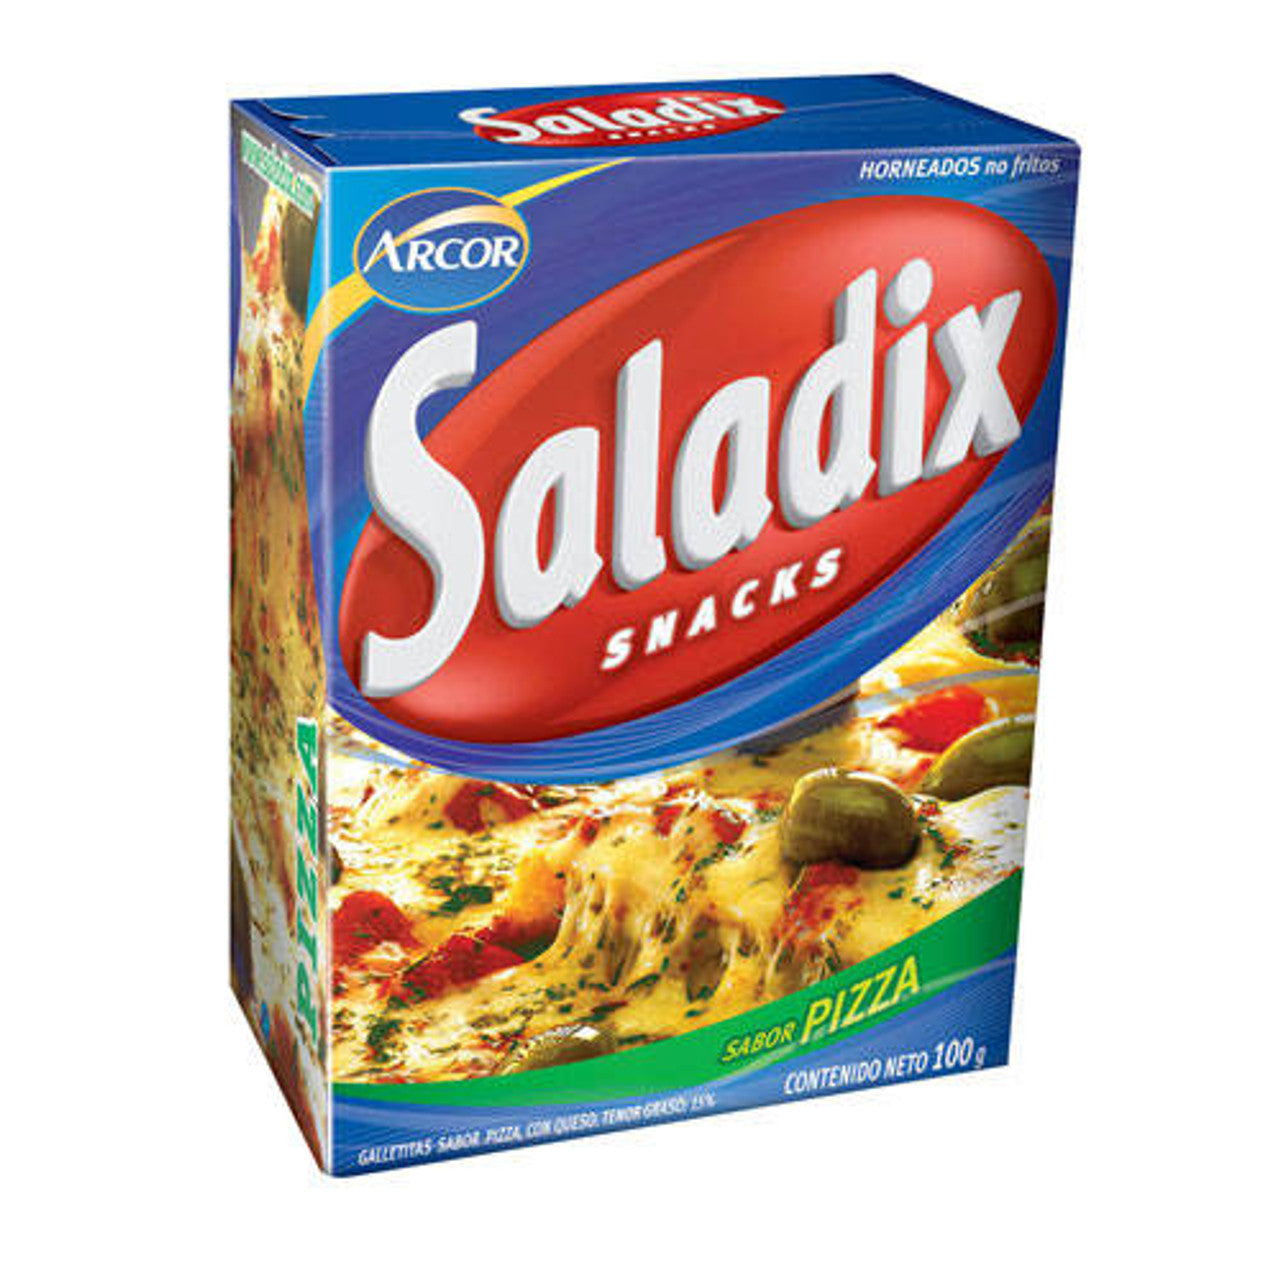 Galletitas Sabor Pizza / Pizza Flavored Biscuits SALADIX - (100 gr - 3.63 oz)